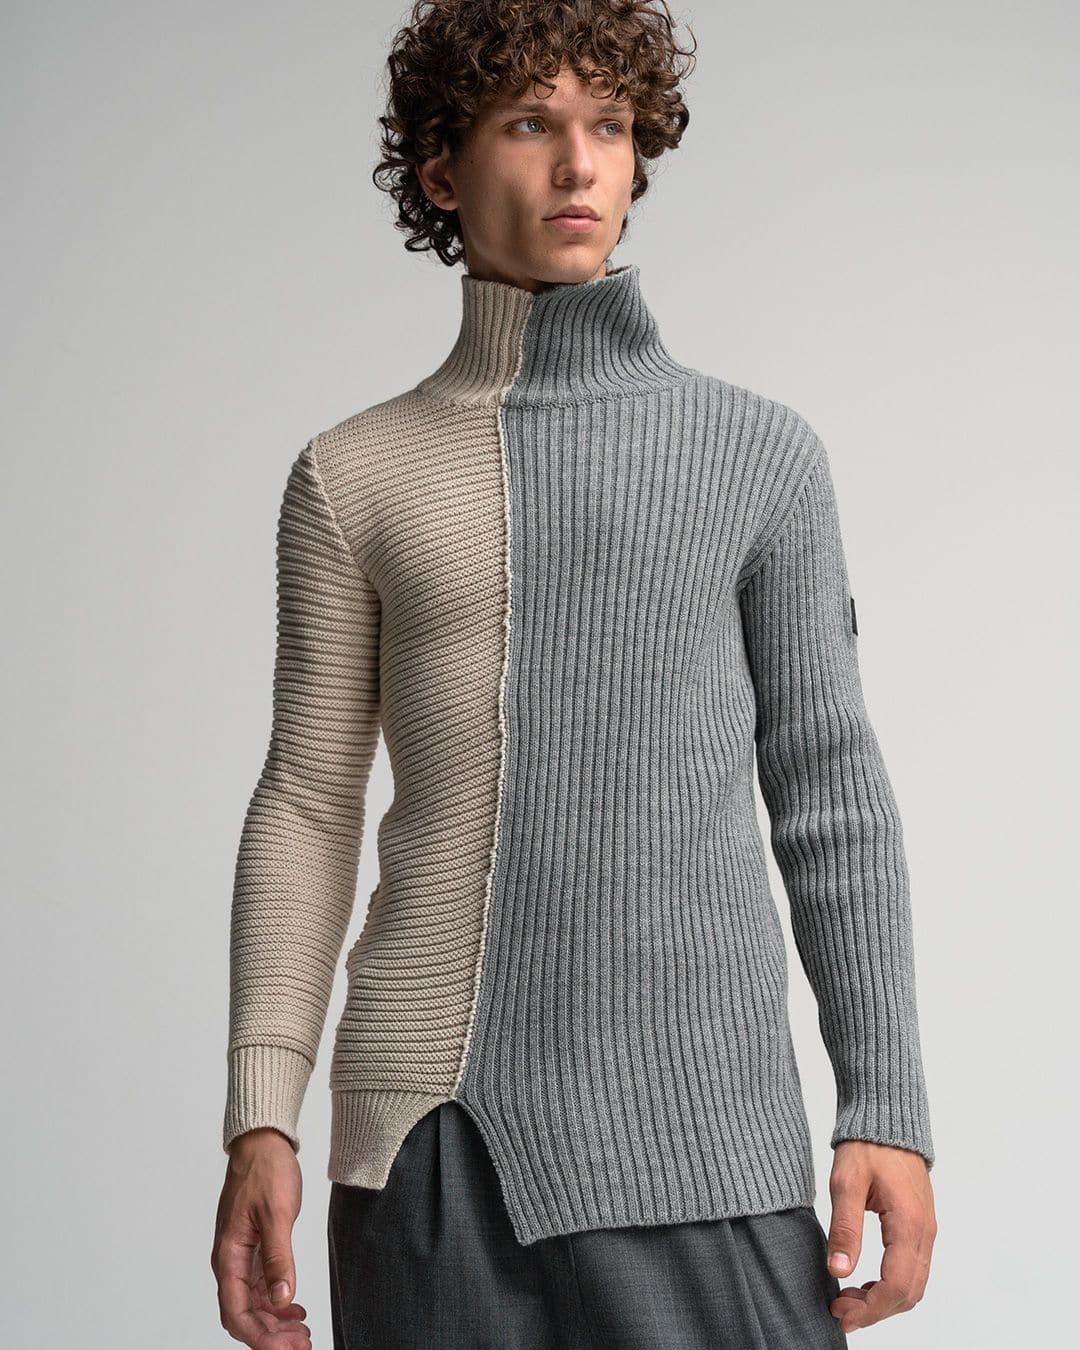 Tailor Made Knitwear Μπλούζα ζιβάγκο δίχρωμη με δύο πλέξεις